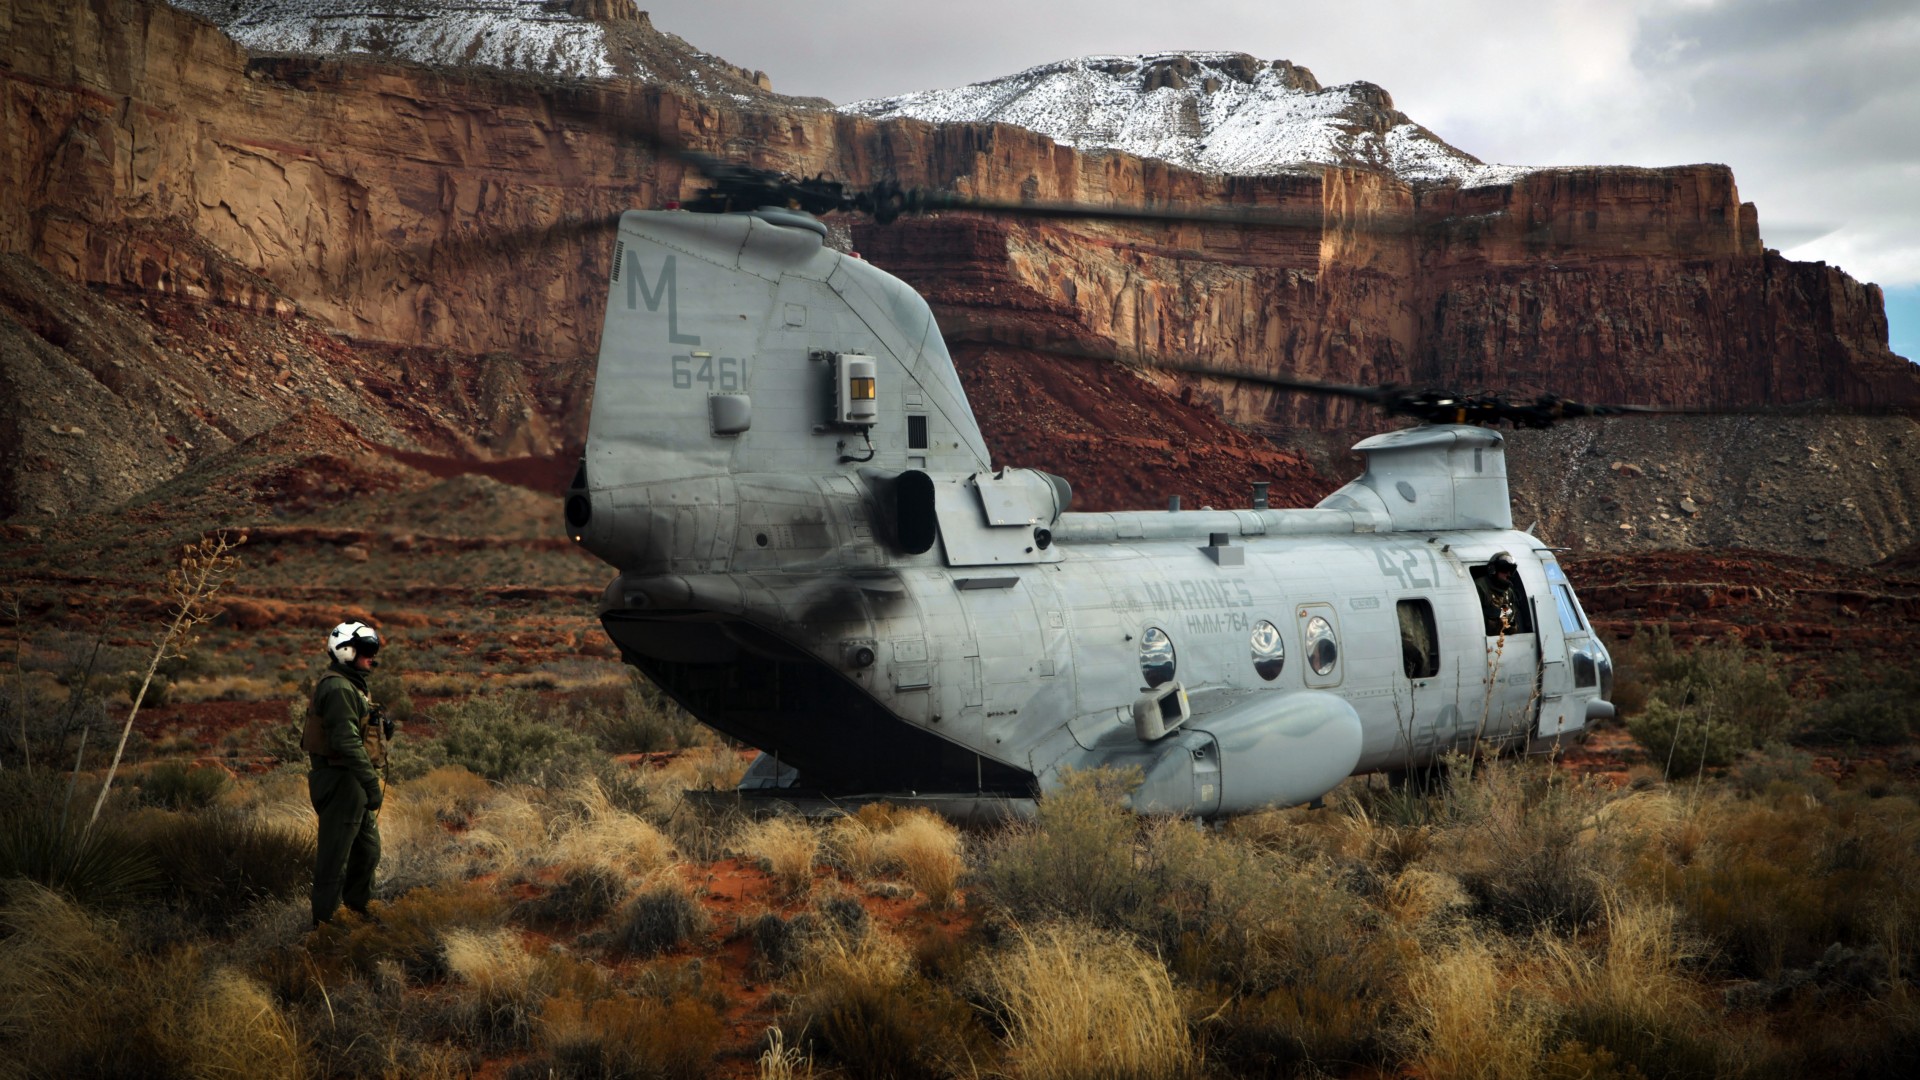 Чинук, военно-транспортный вертолёт, Армия США, CH-47, Chinook, Boeing, transport helicopter, U.S. Army, pilot, Grand Canyon Village (horizontal)